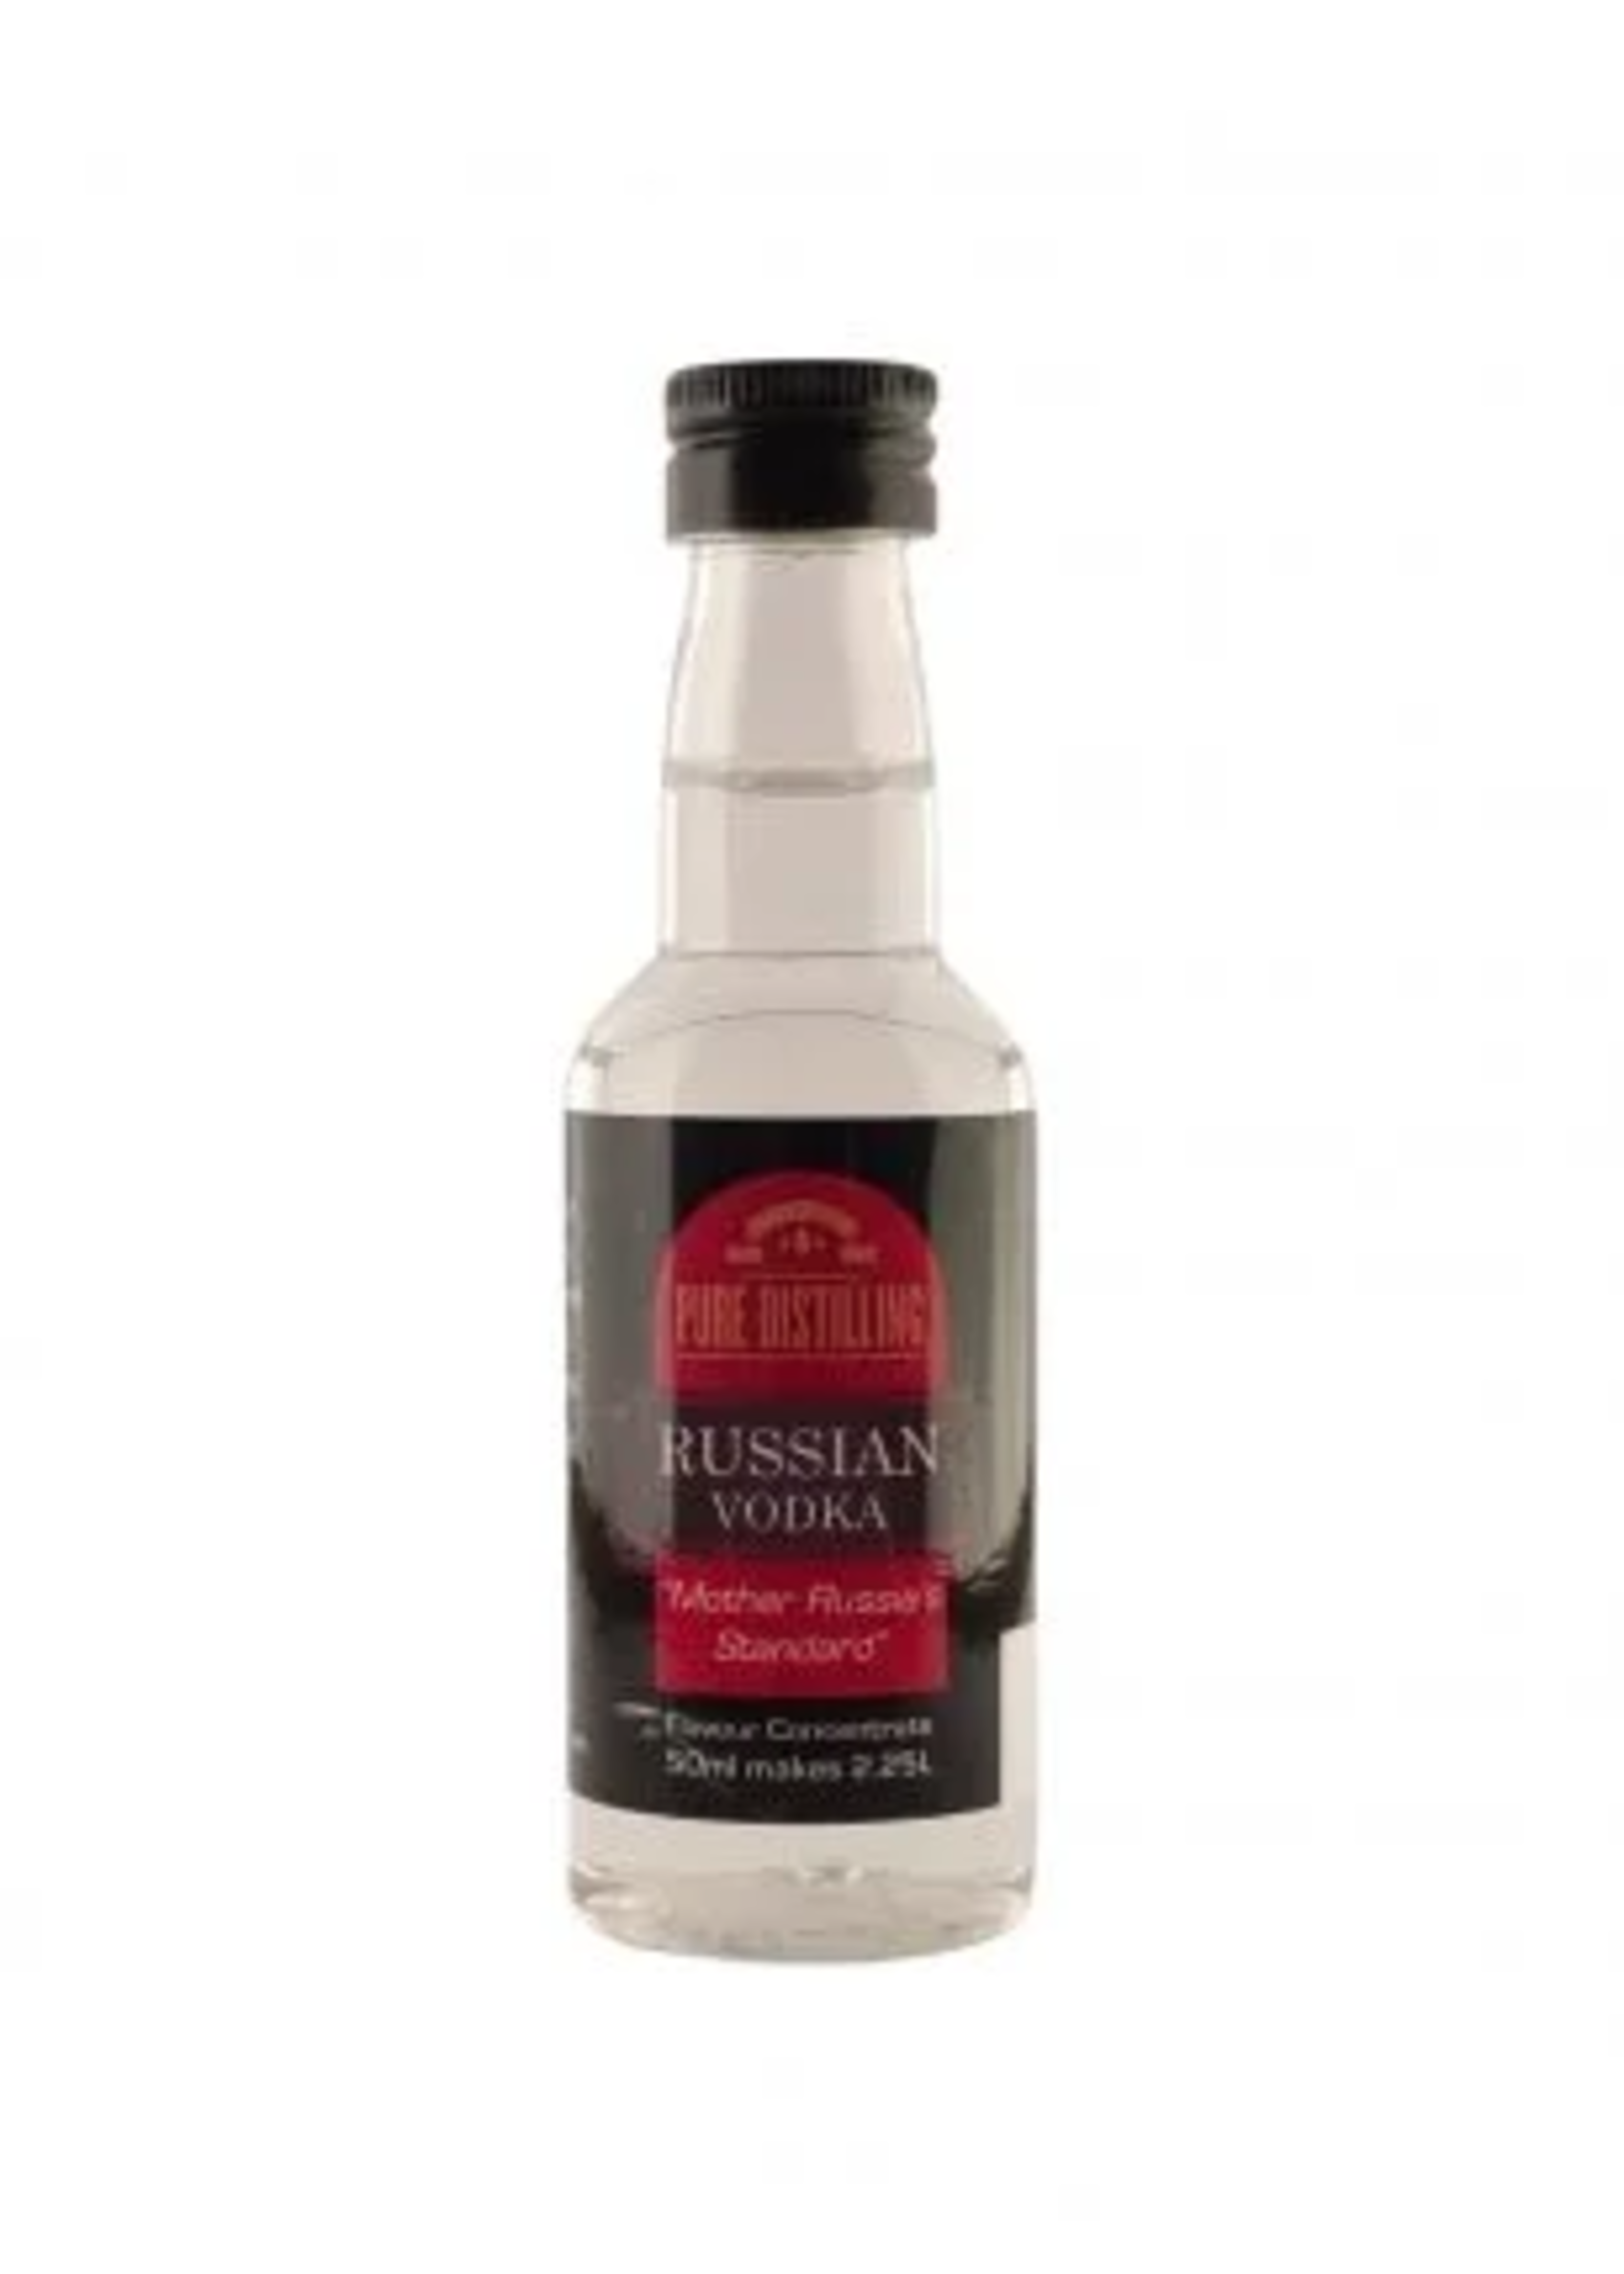 Pure distilling Pure Distilling Russian Vodka